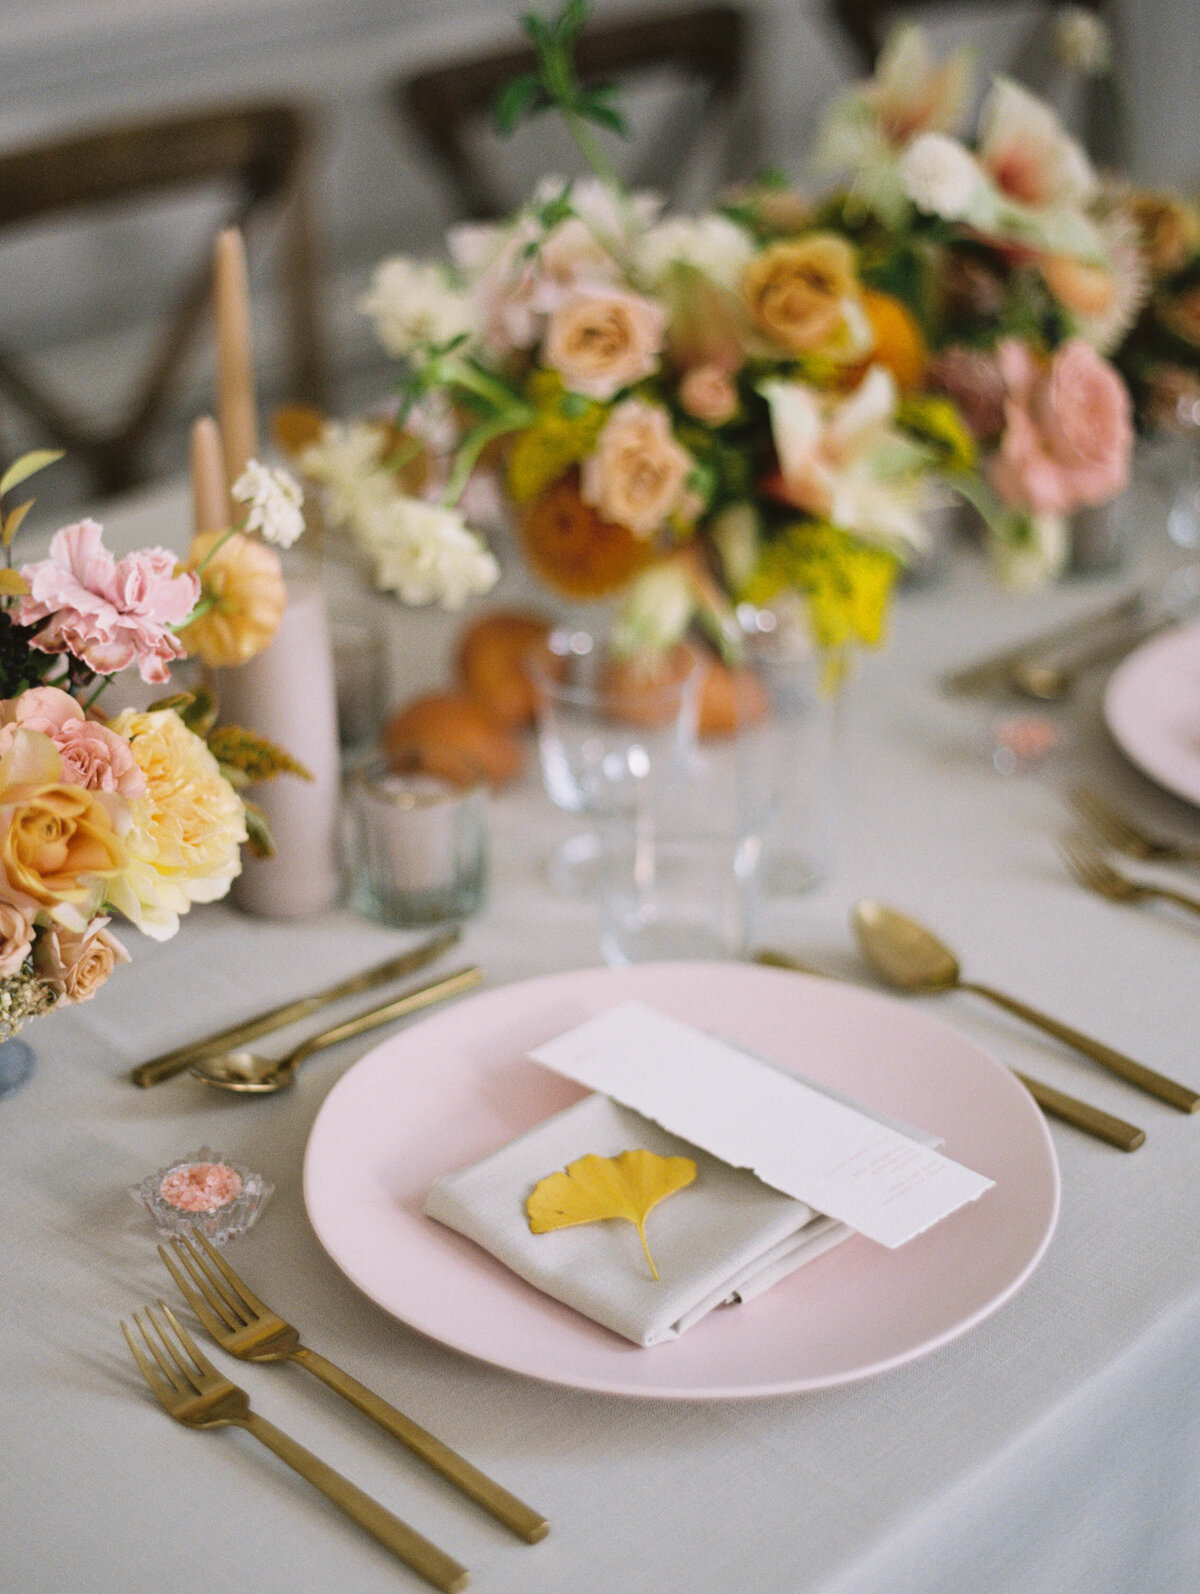 max-owens-design-yellow-wedding-flowers-09-pink-plate-modern